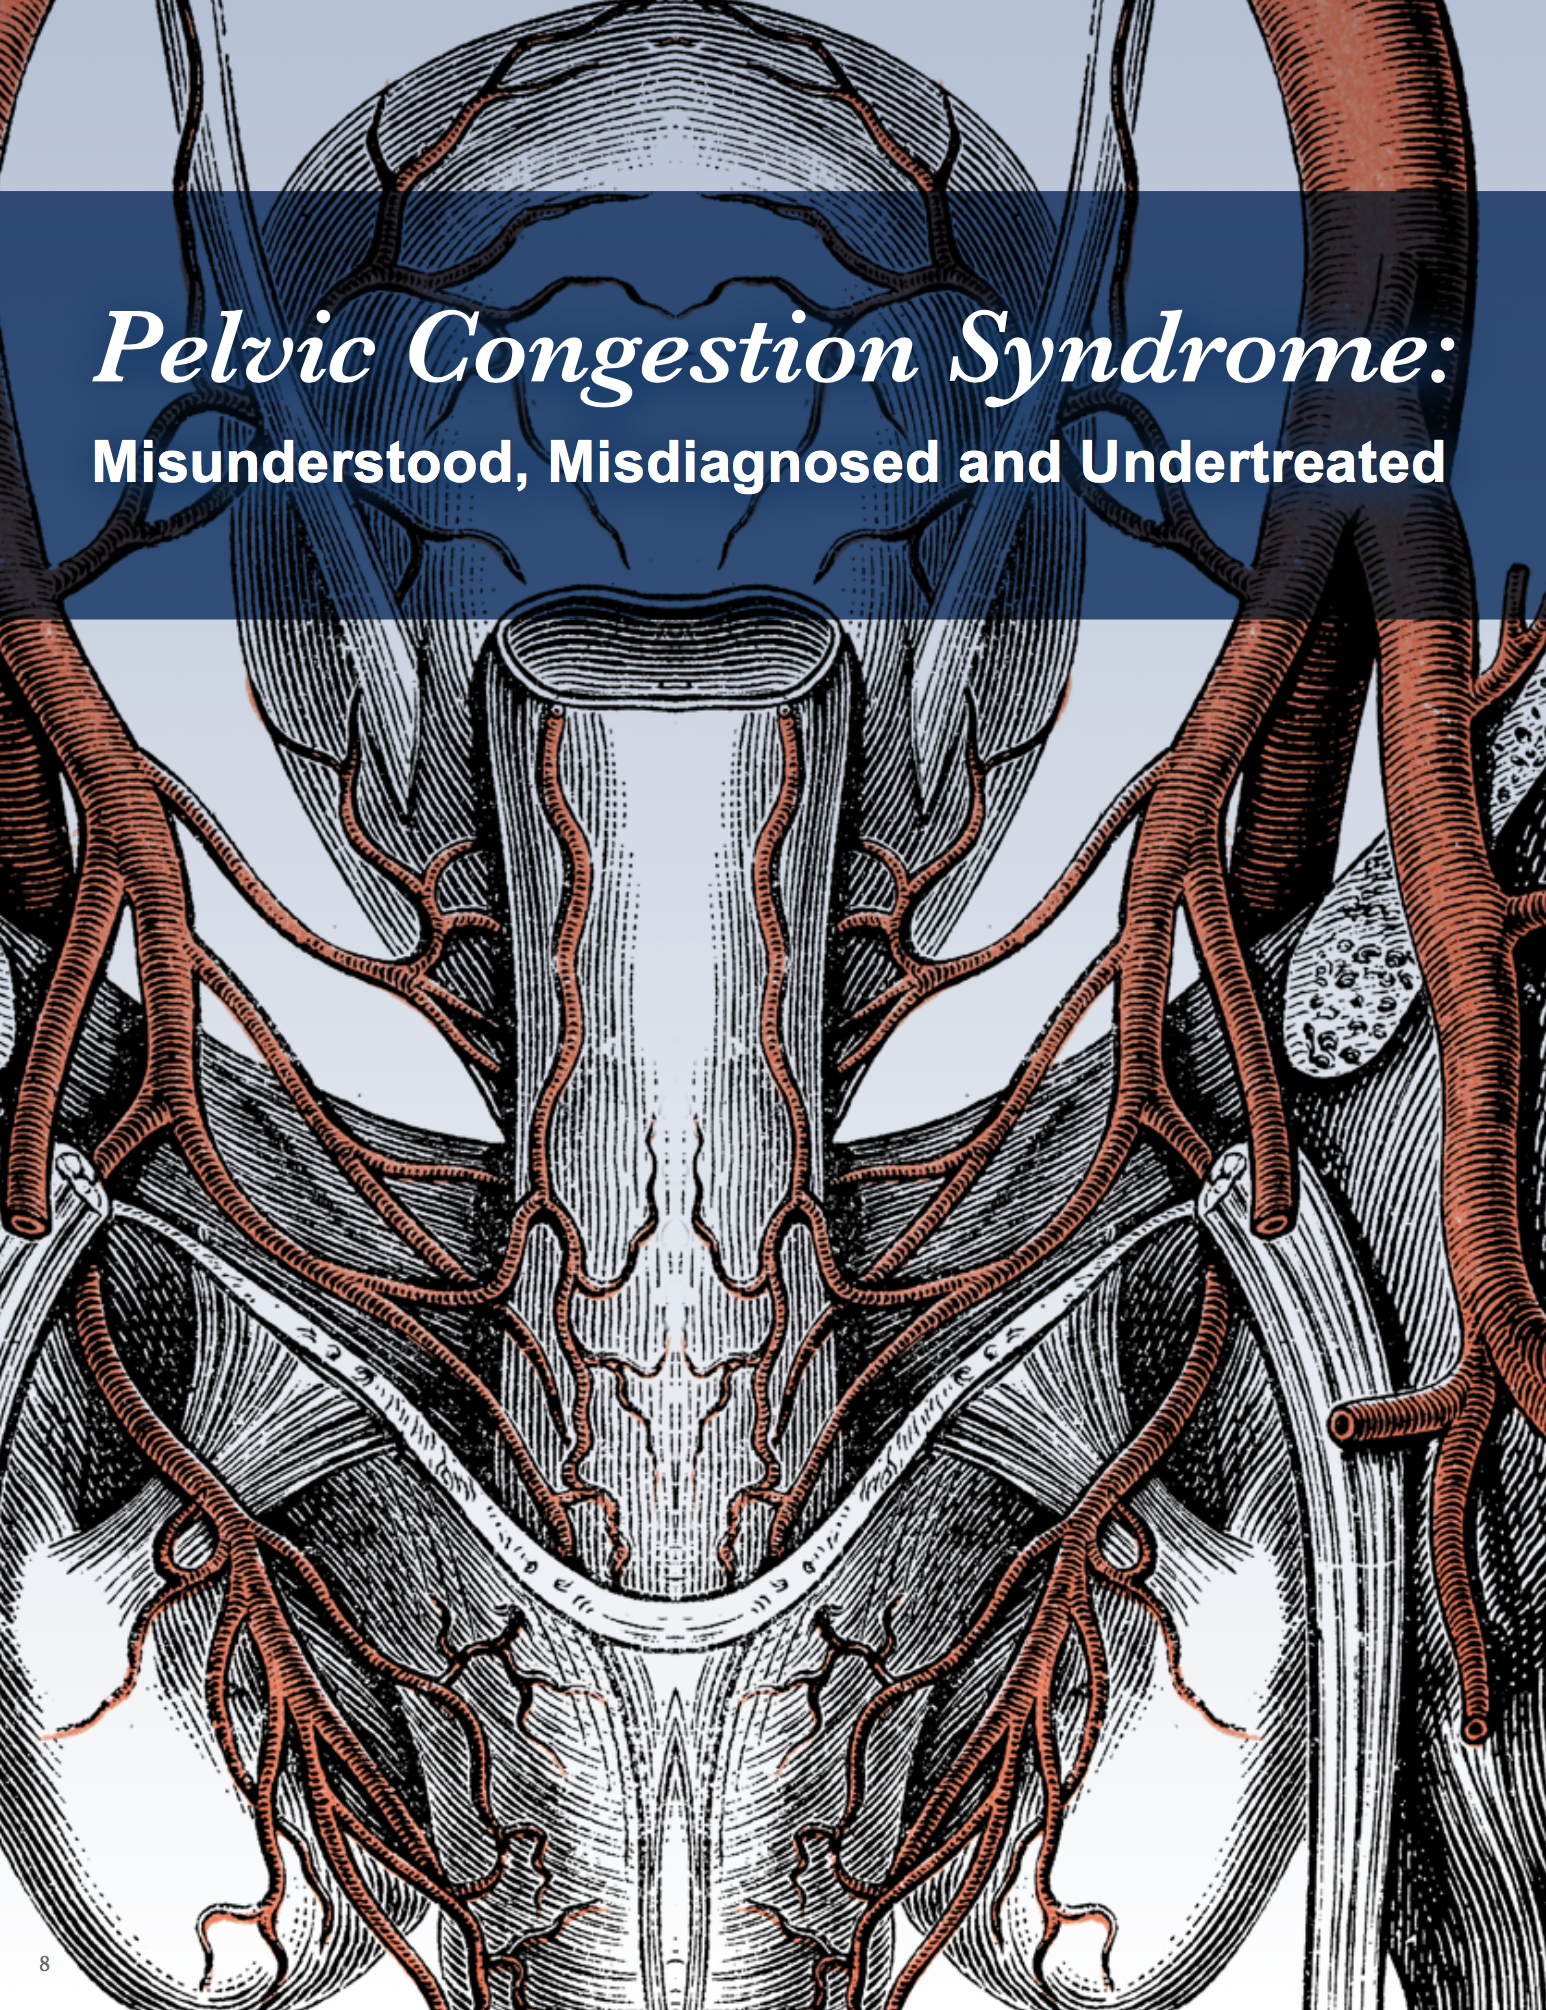 Pelvic congestion syndrome